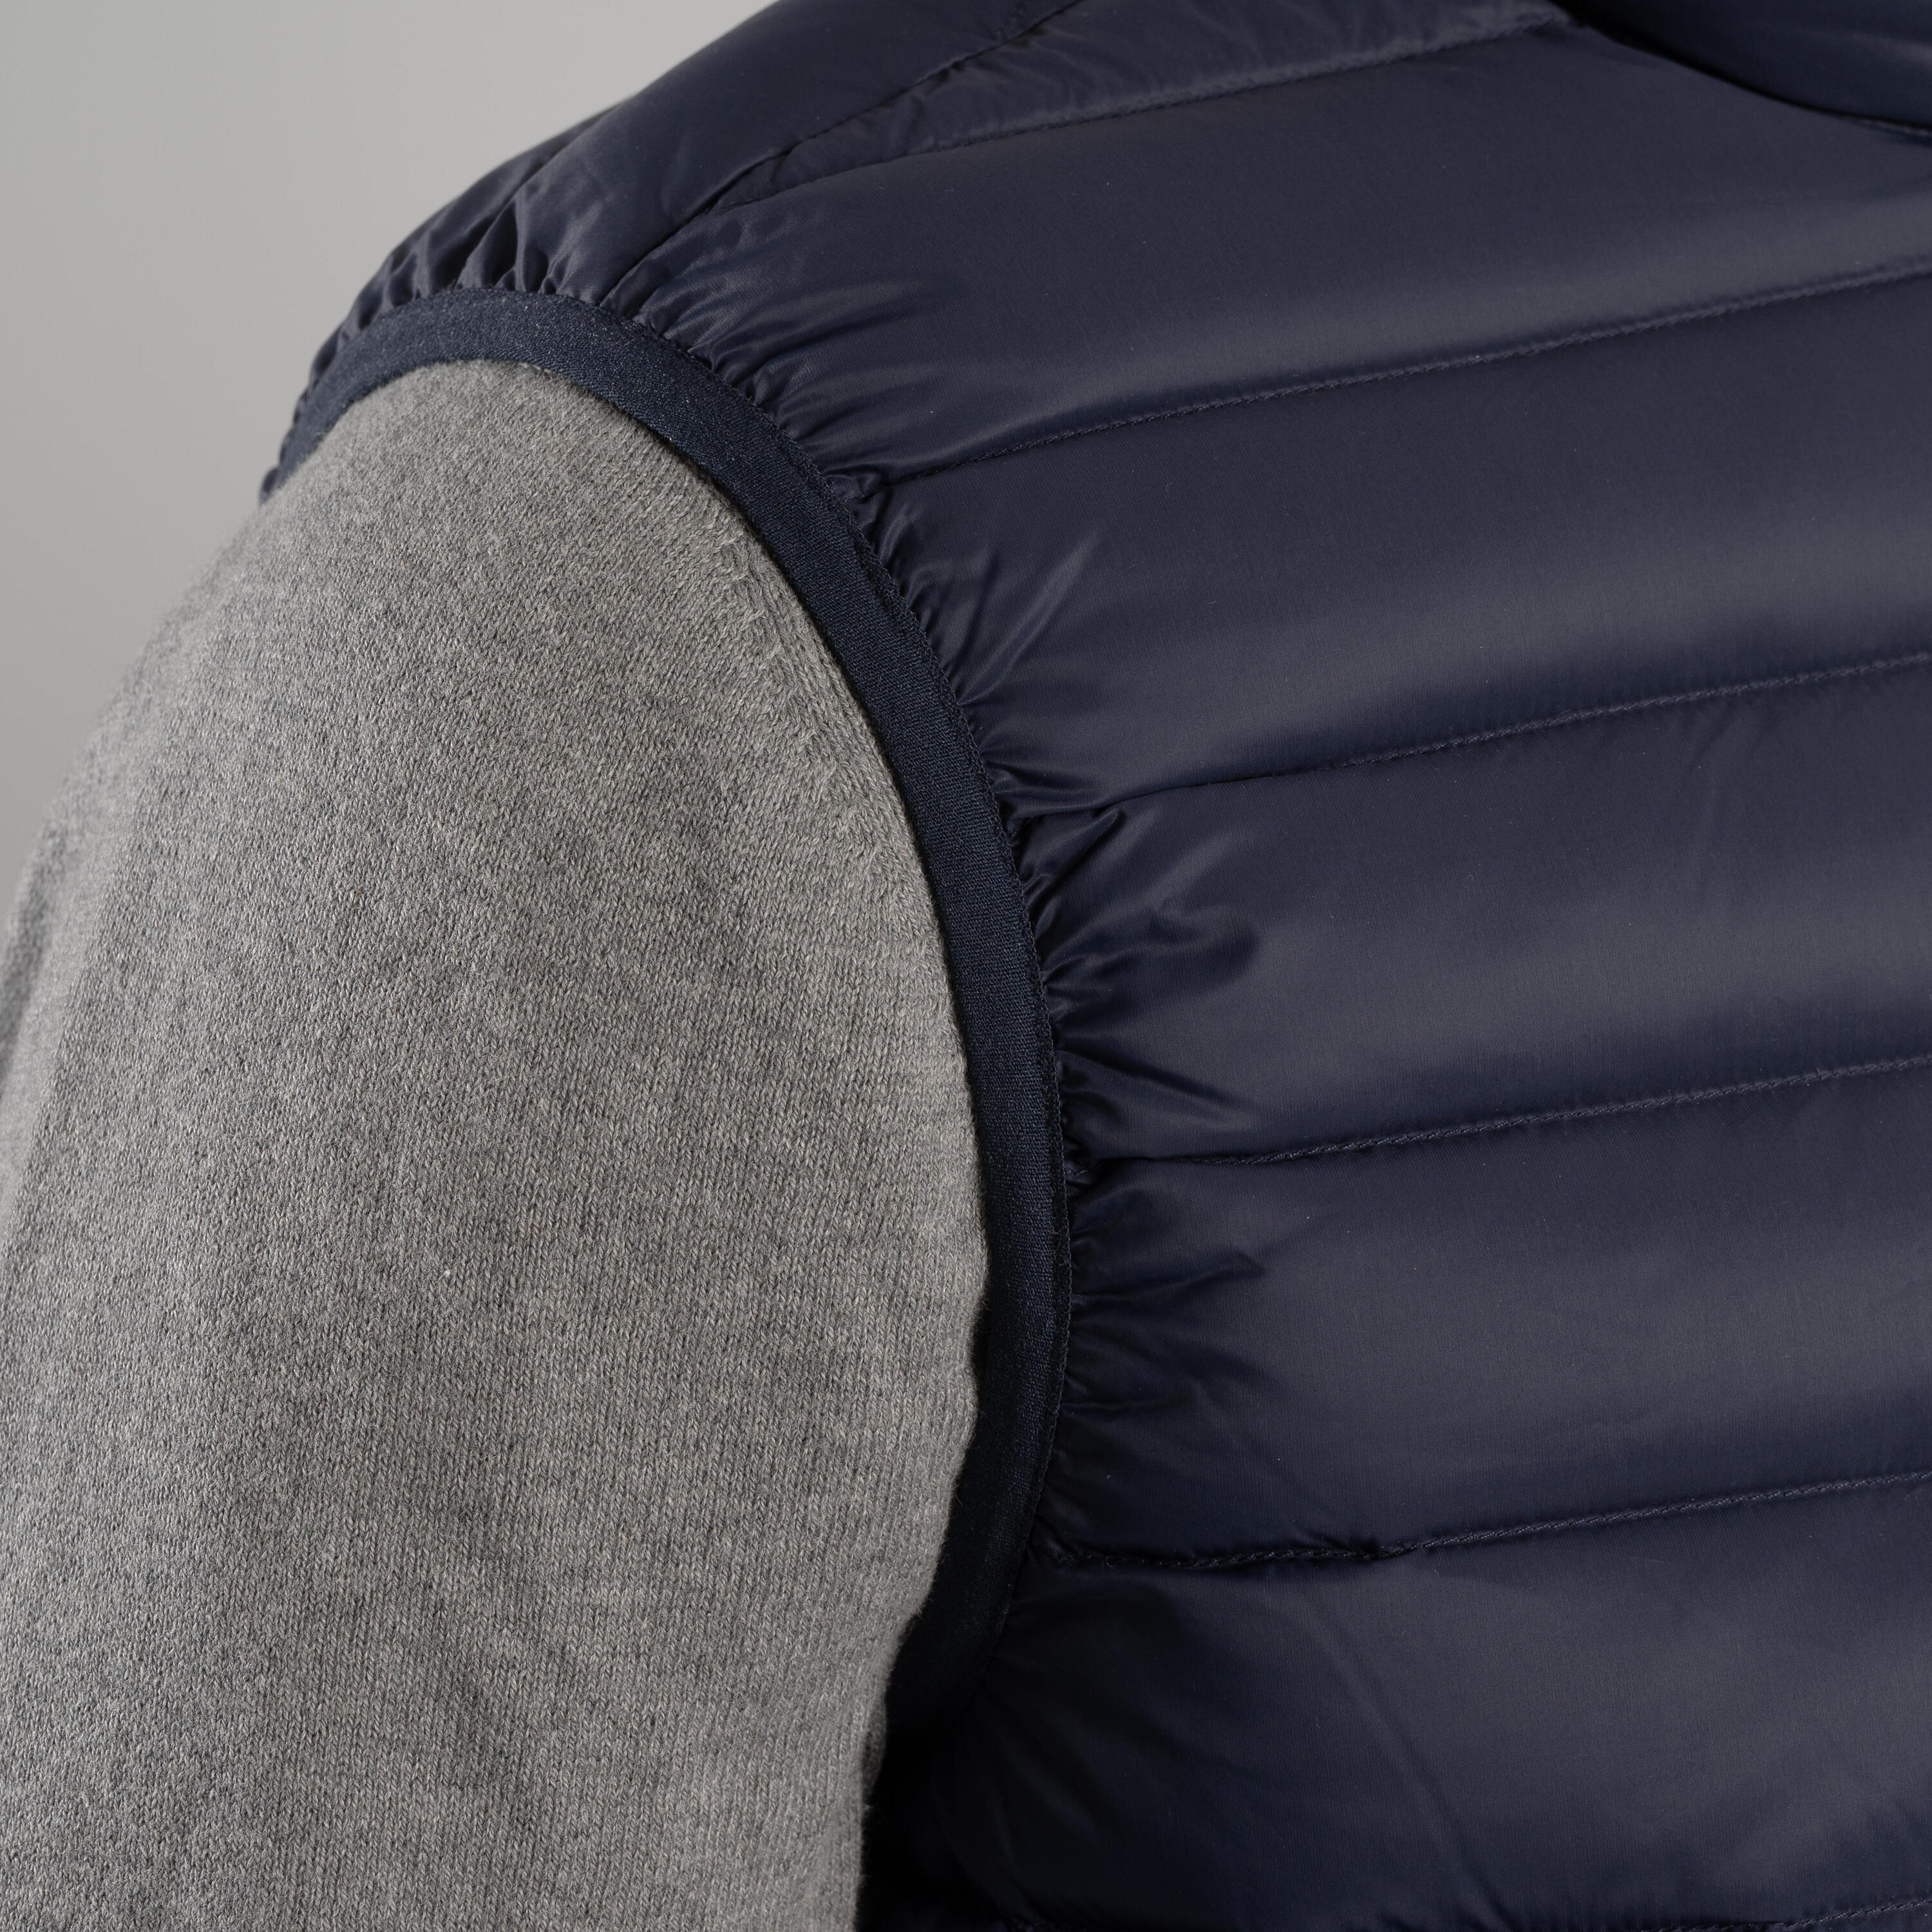 Men's sleeveless down golf jacket - MW500 navy blue 8/10